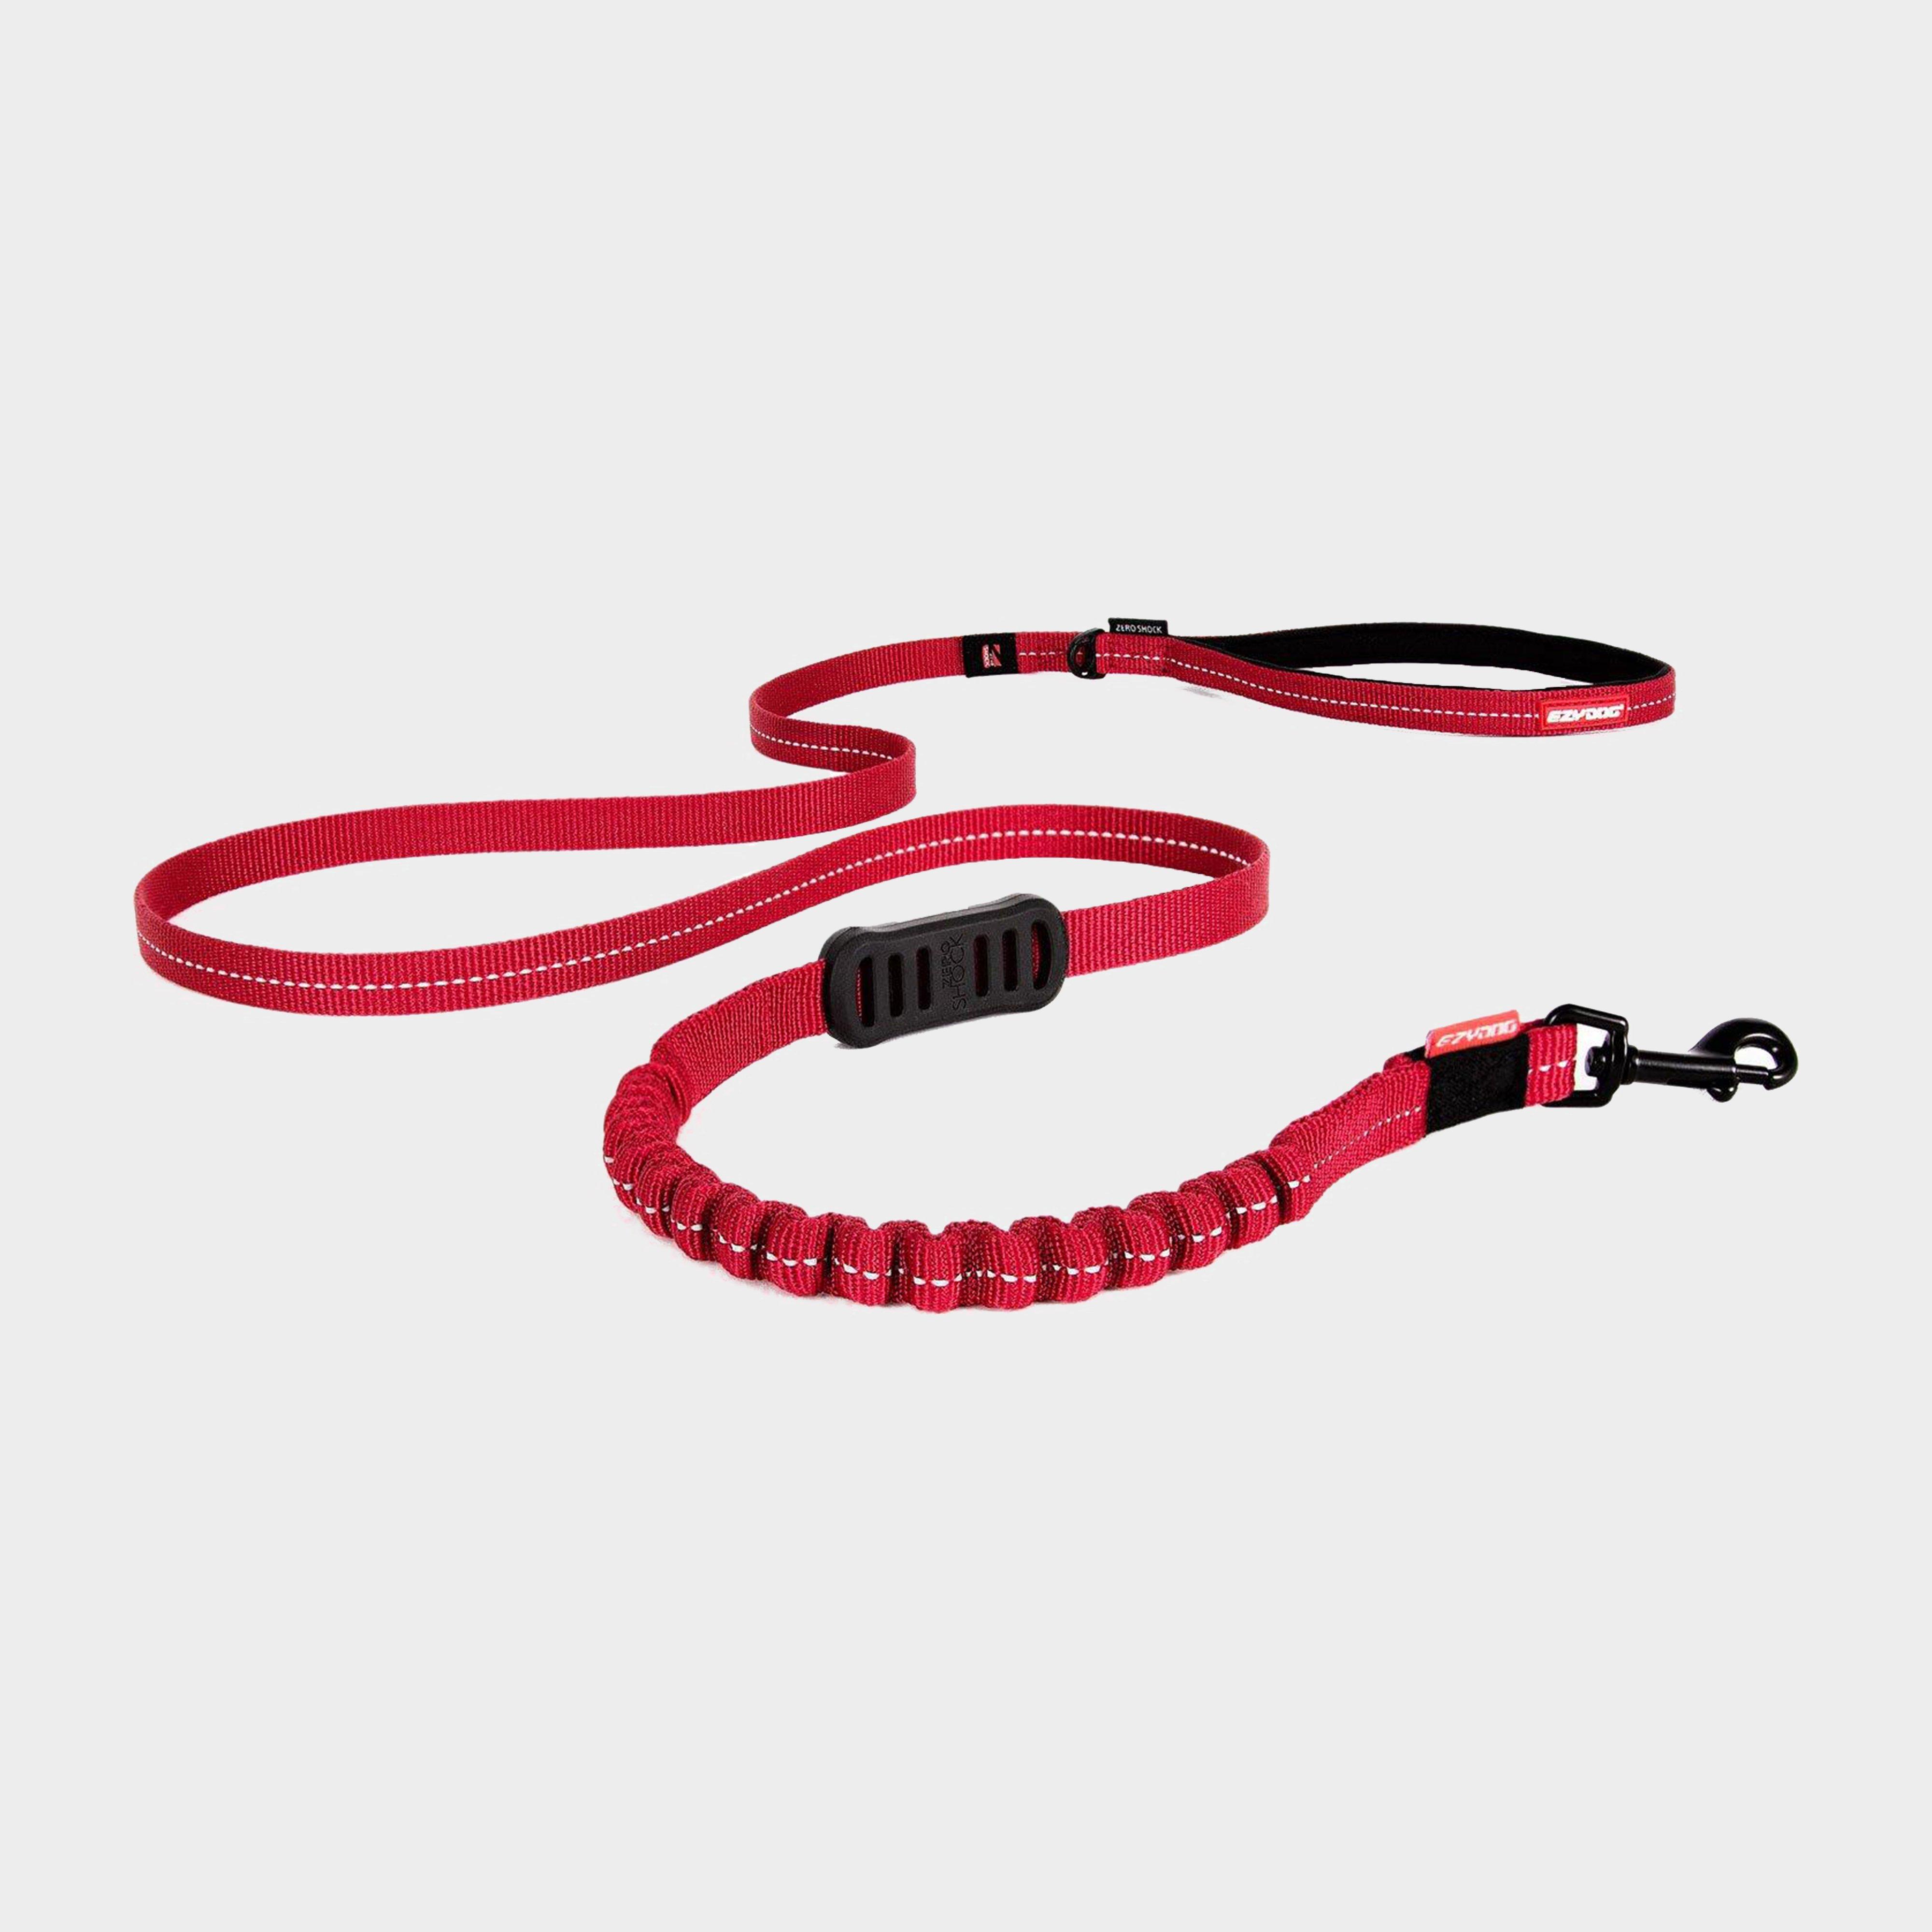 Ezy-dog Zero Shock Lite Dog Lead (48) - Red/grey  Red/grey